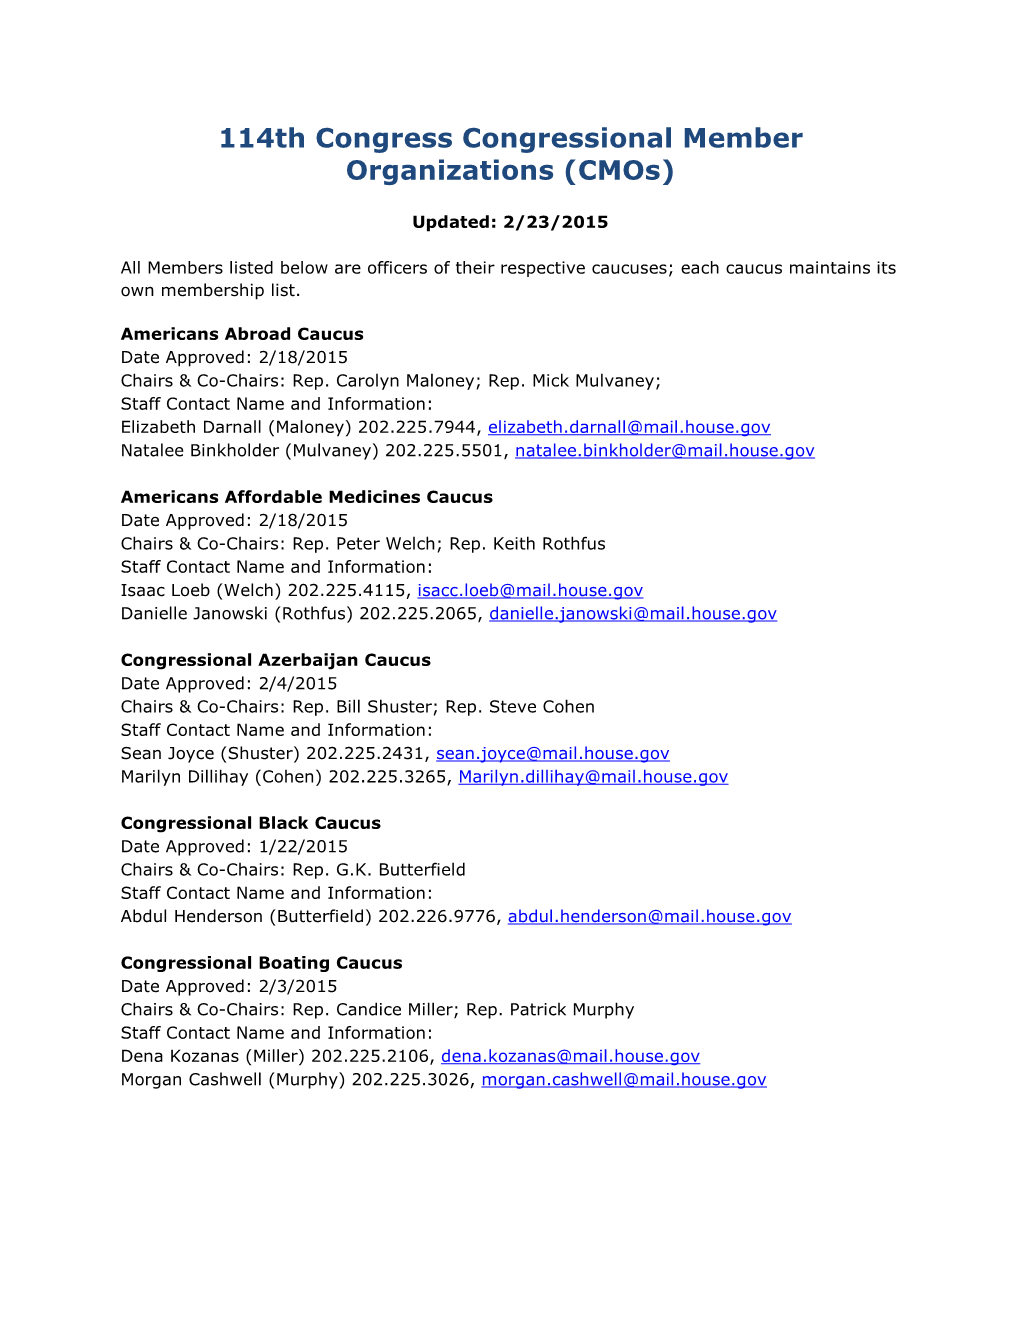 114Th Congress Congressional Member Organizations (Cmos)